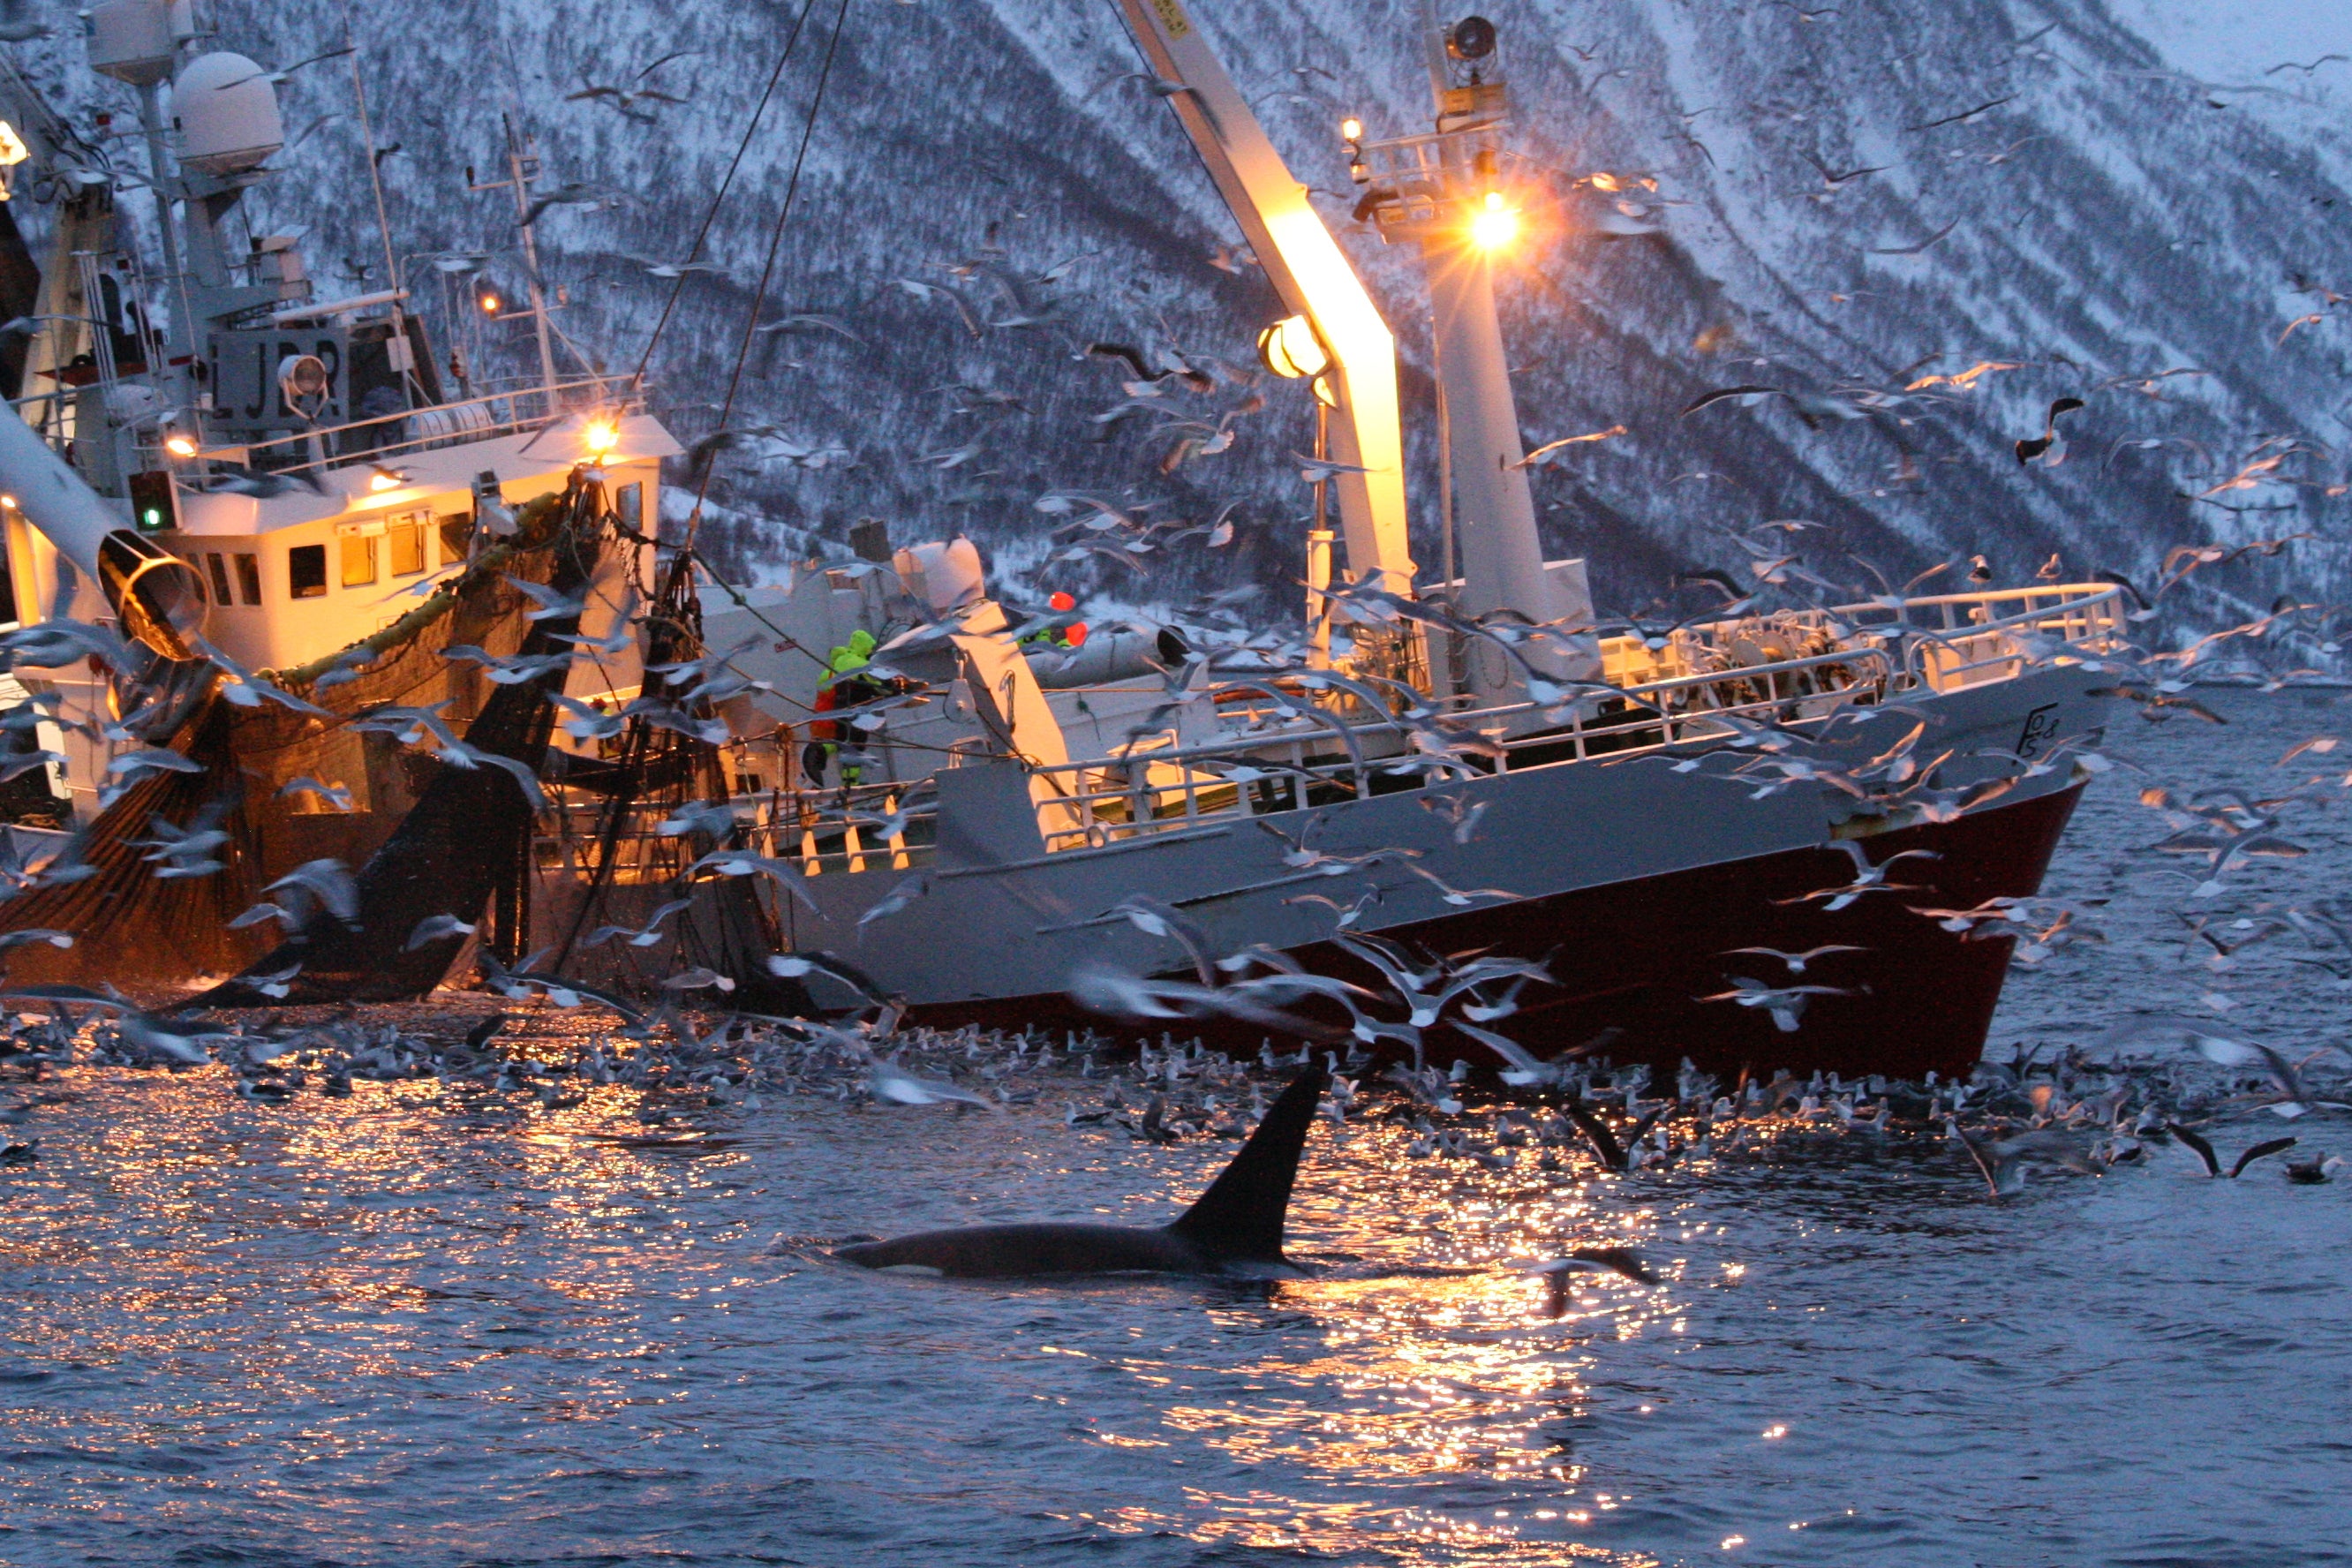 An orca, or killer whale, feeding on herrings near fishing boat in Kaldfjord, Tromso, Norway, Atlantic Ocean